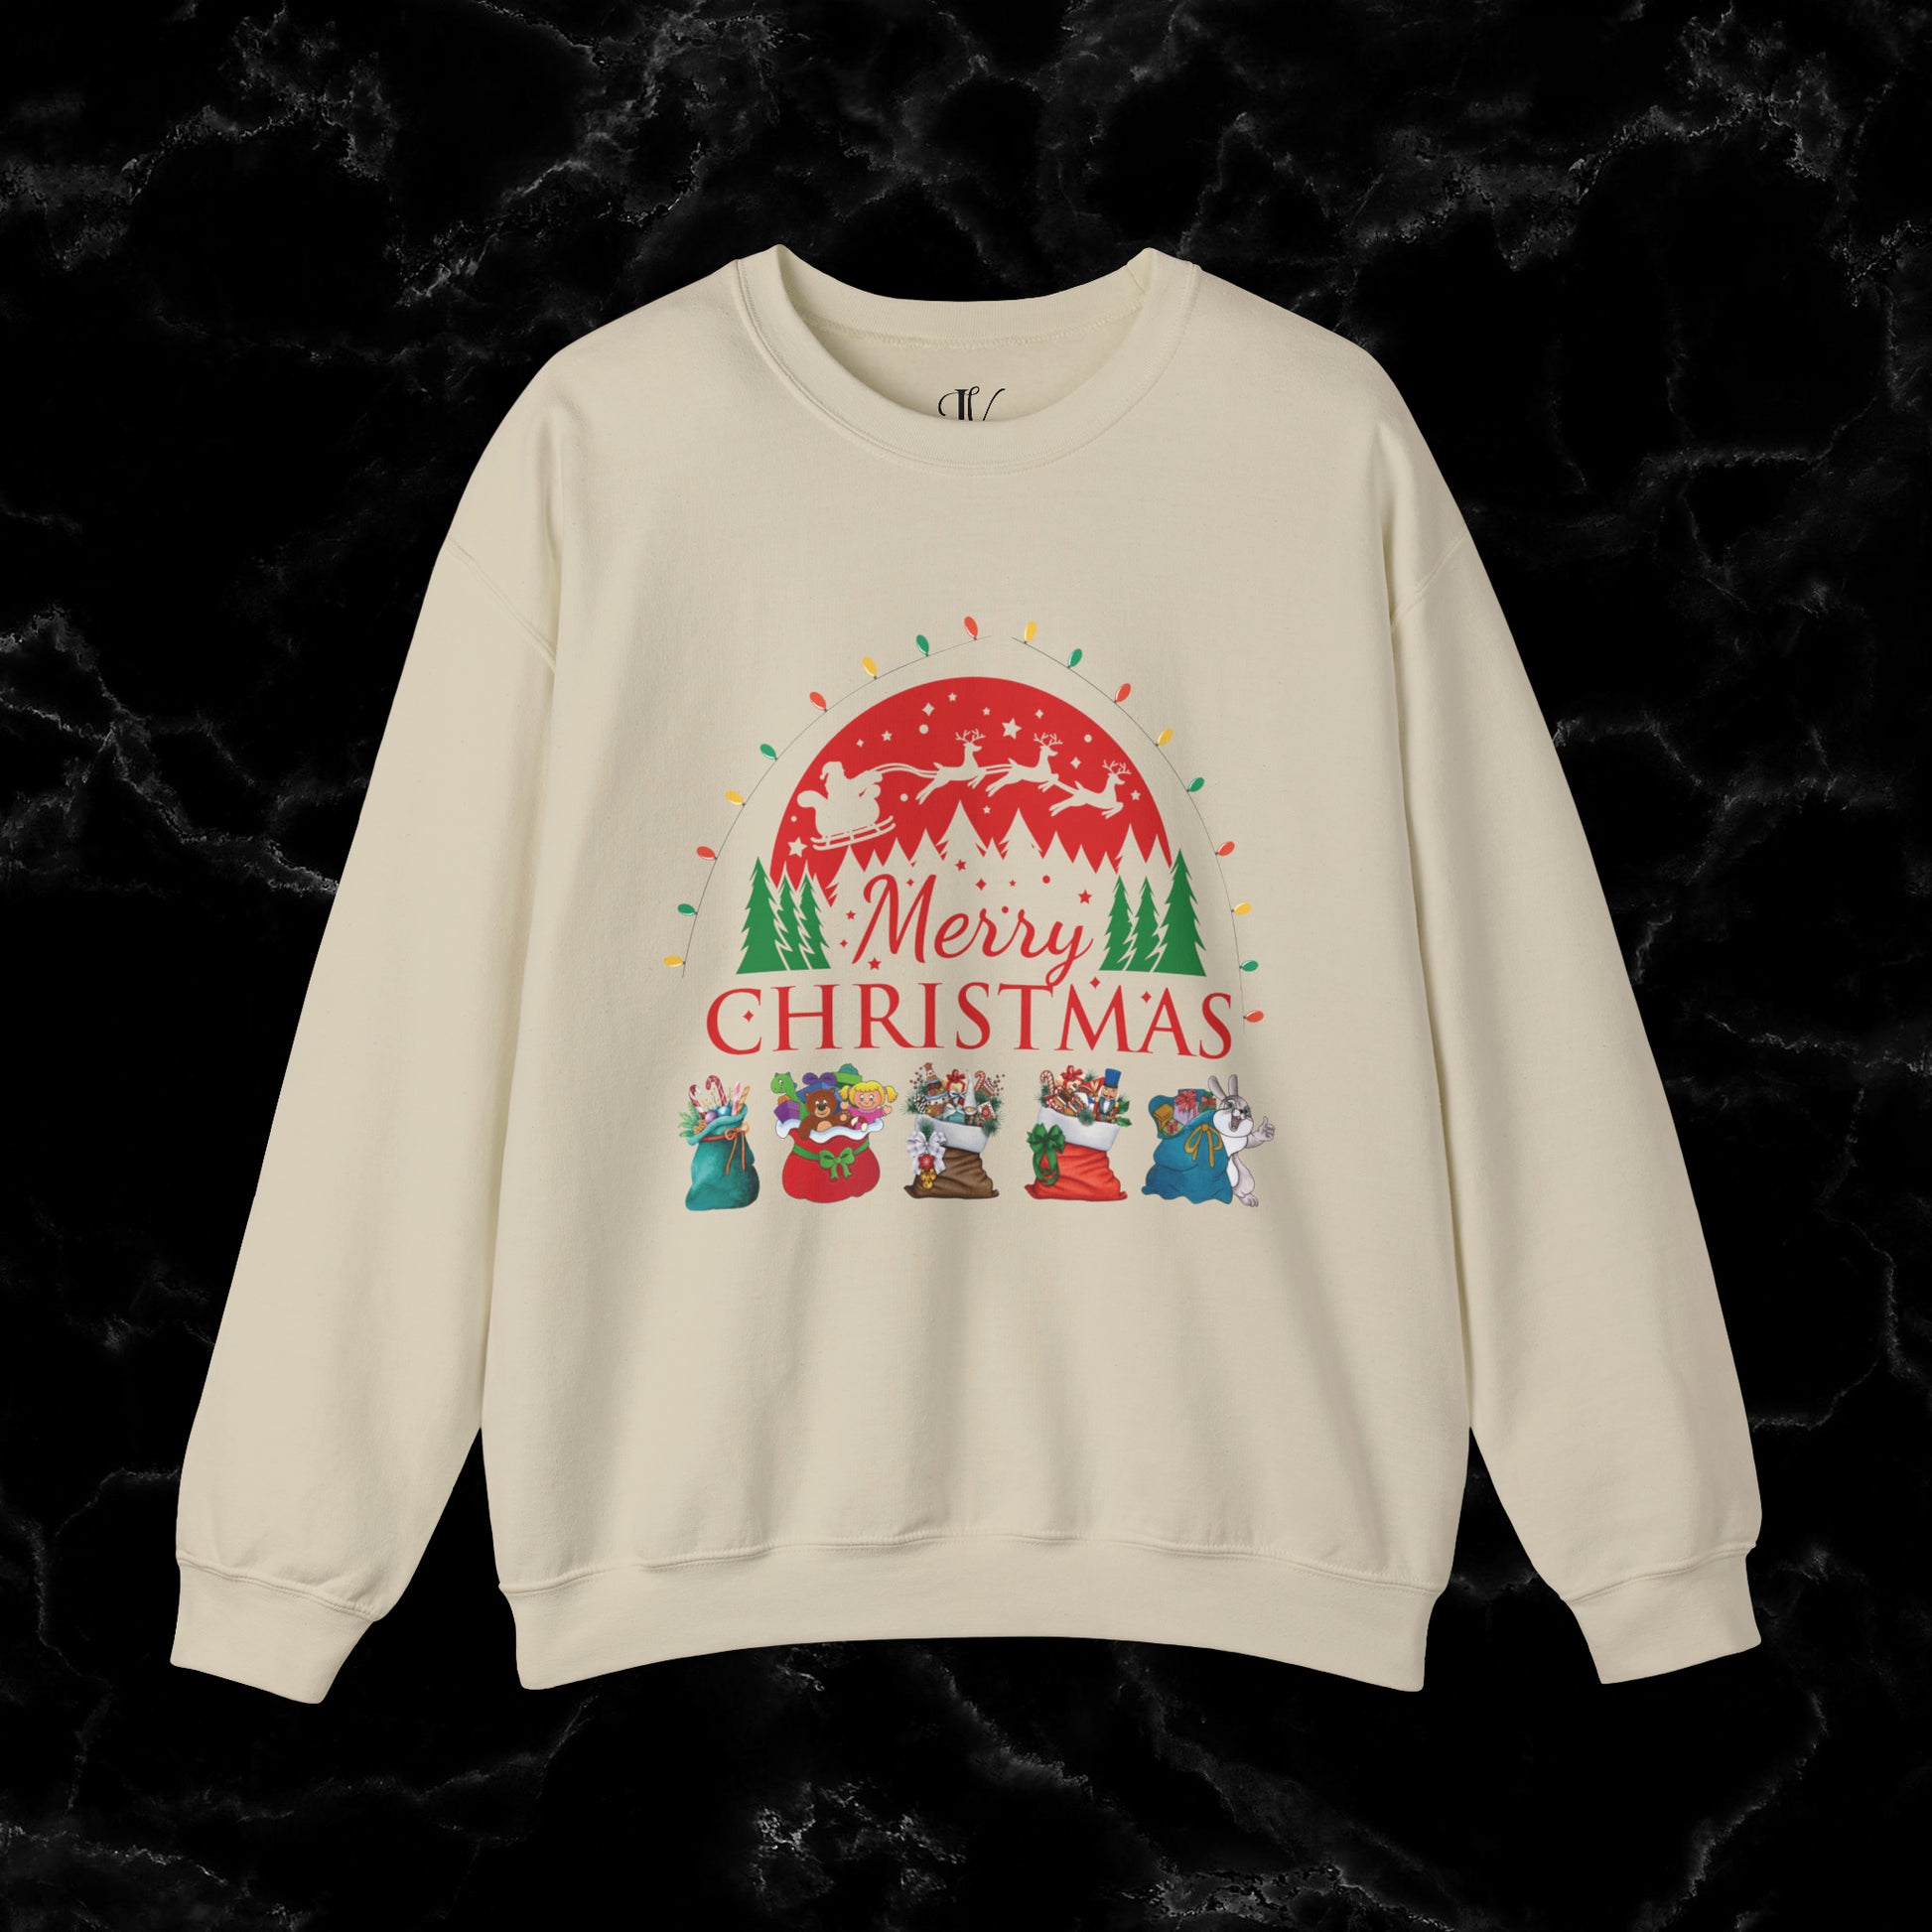 Merry Christmas Sweatshirt - Christmas Shirt with Santa and Festive Theme Sweatshirt S Sand 